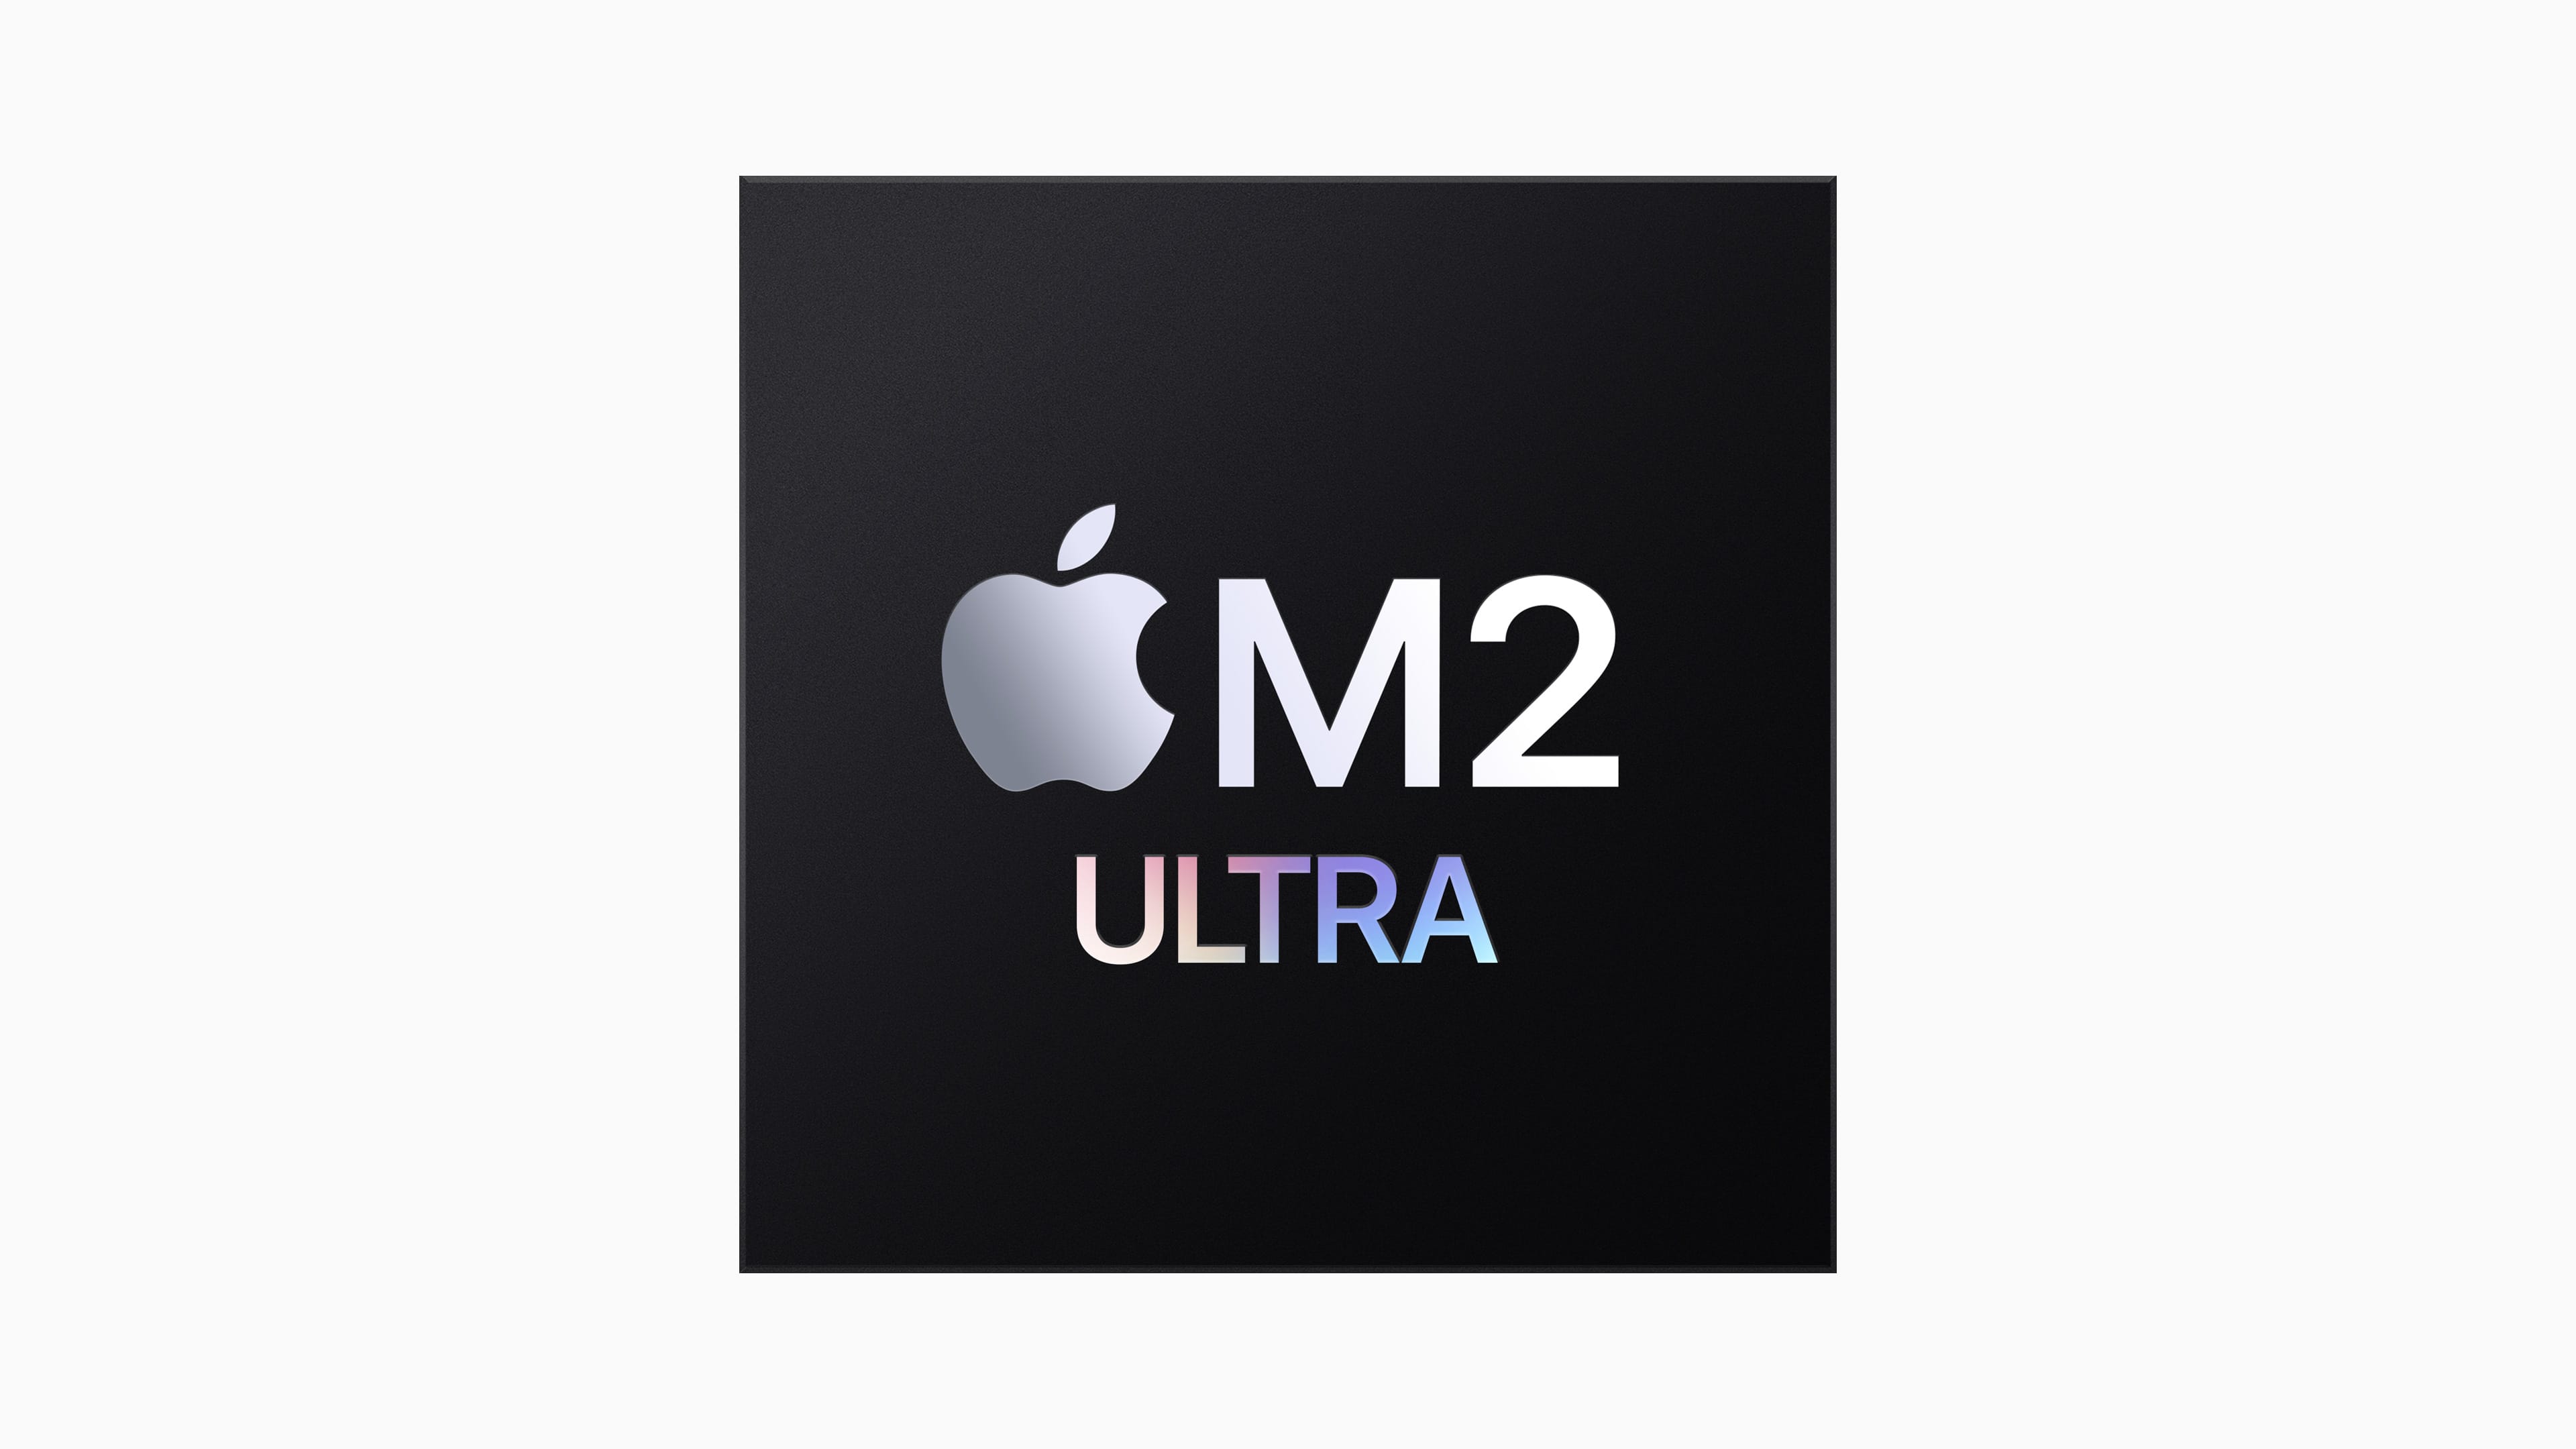 「M2 Ultra」のベンチマーク結果が公開